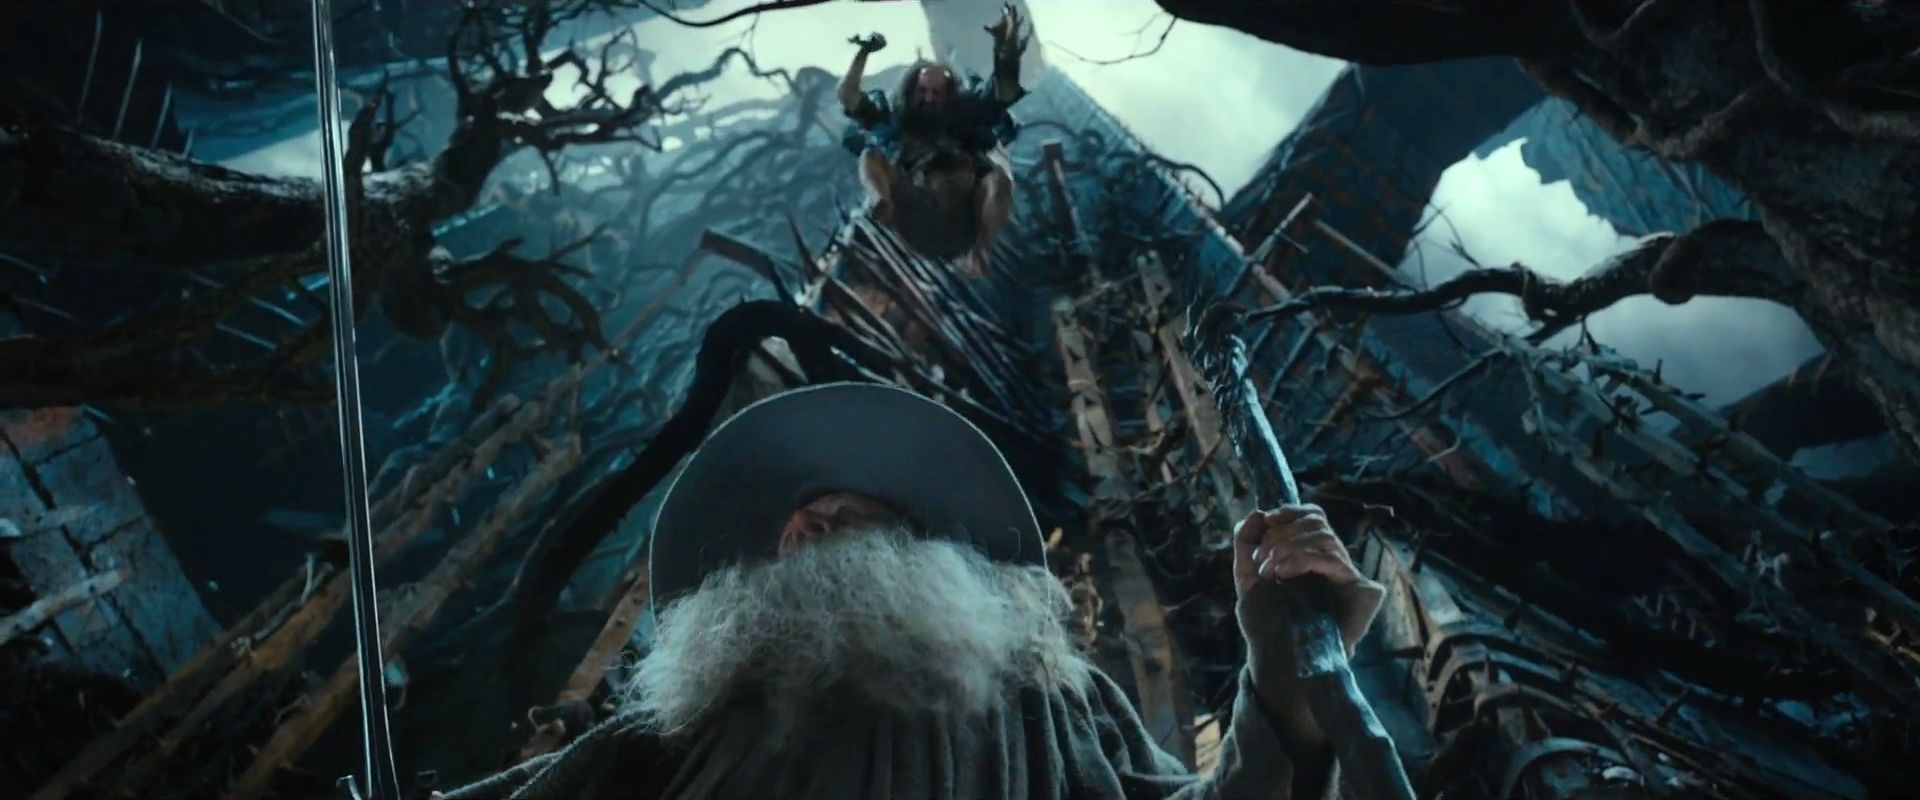 The Hobbit: The Desolation Of Smaug Trailer Photo #10